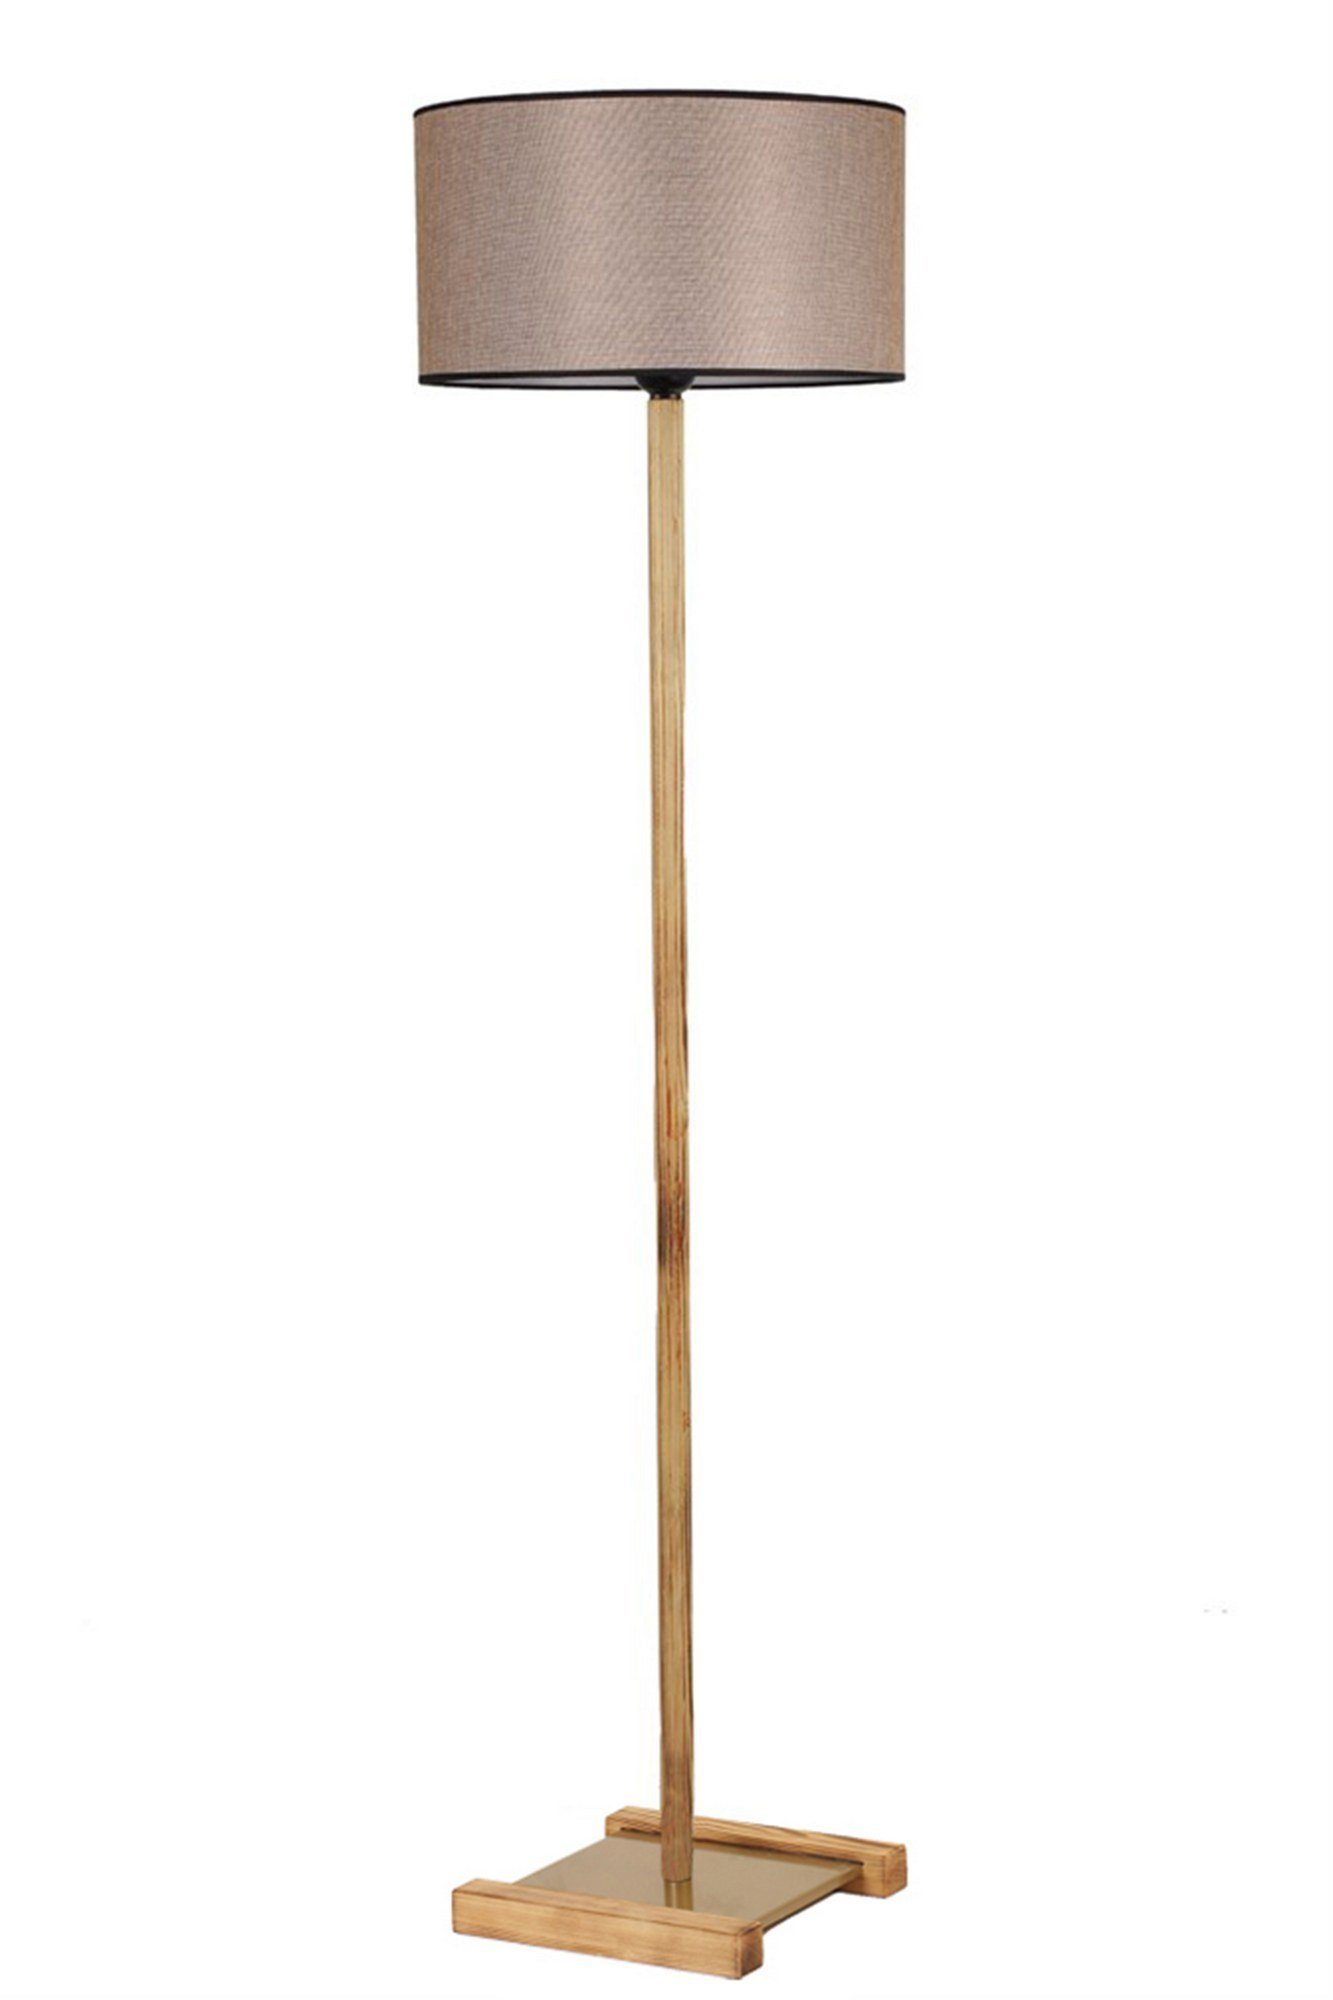 Opviq Stehlampe Lun, Eiche, 25 x 25 cm, Tannenholzkörper